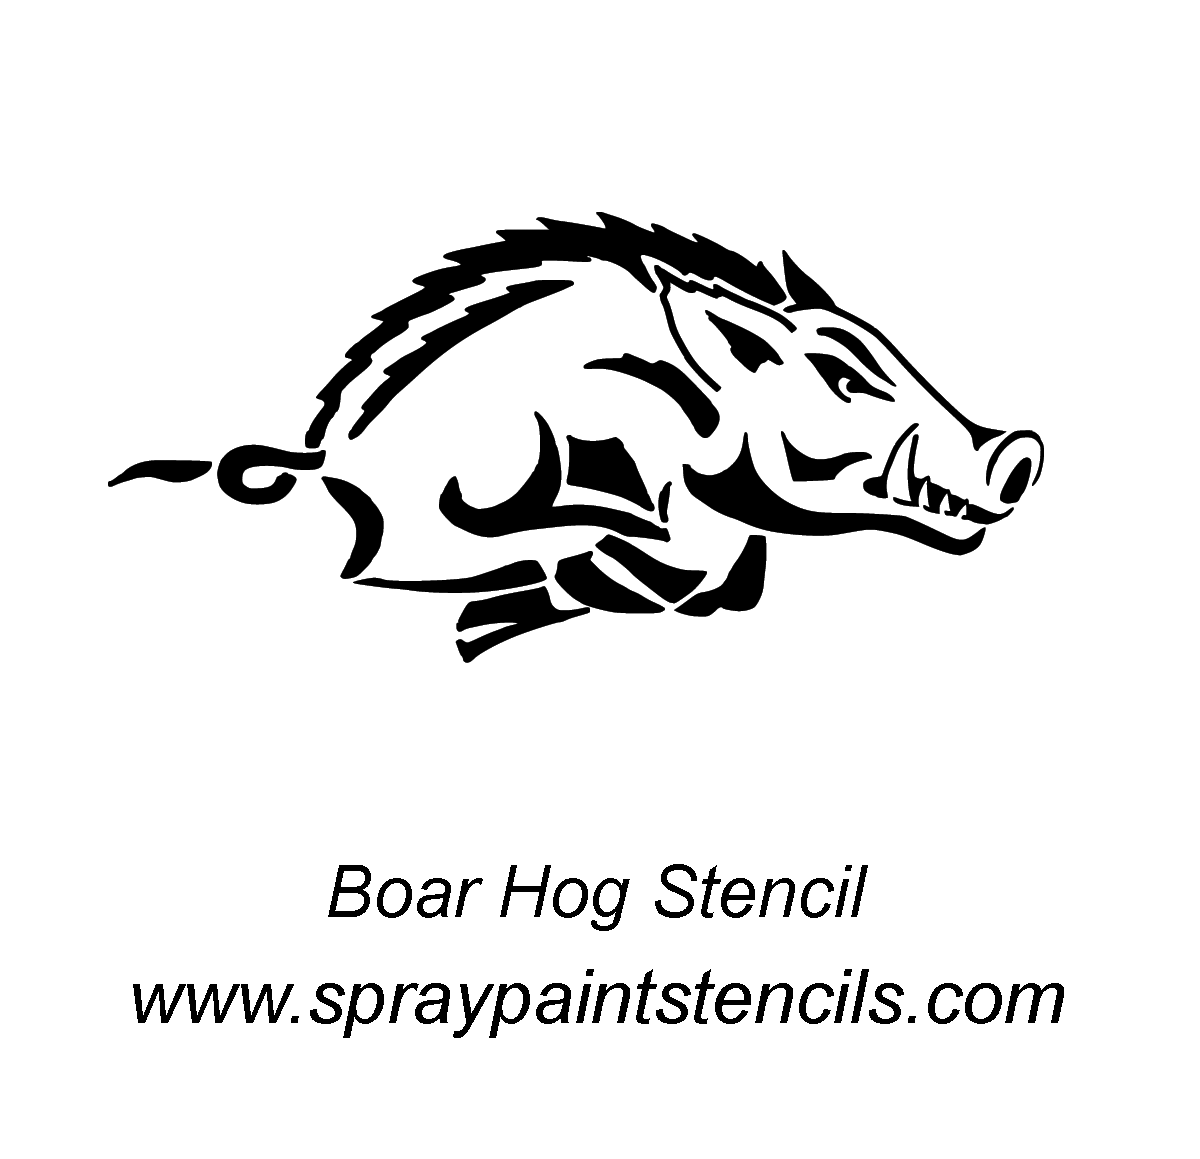 Hog Face Logo - razorback stencil.wagenaardentistry.com